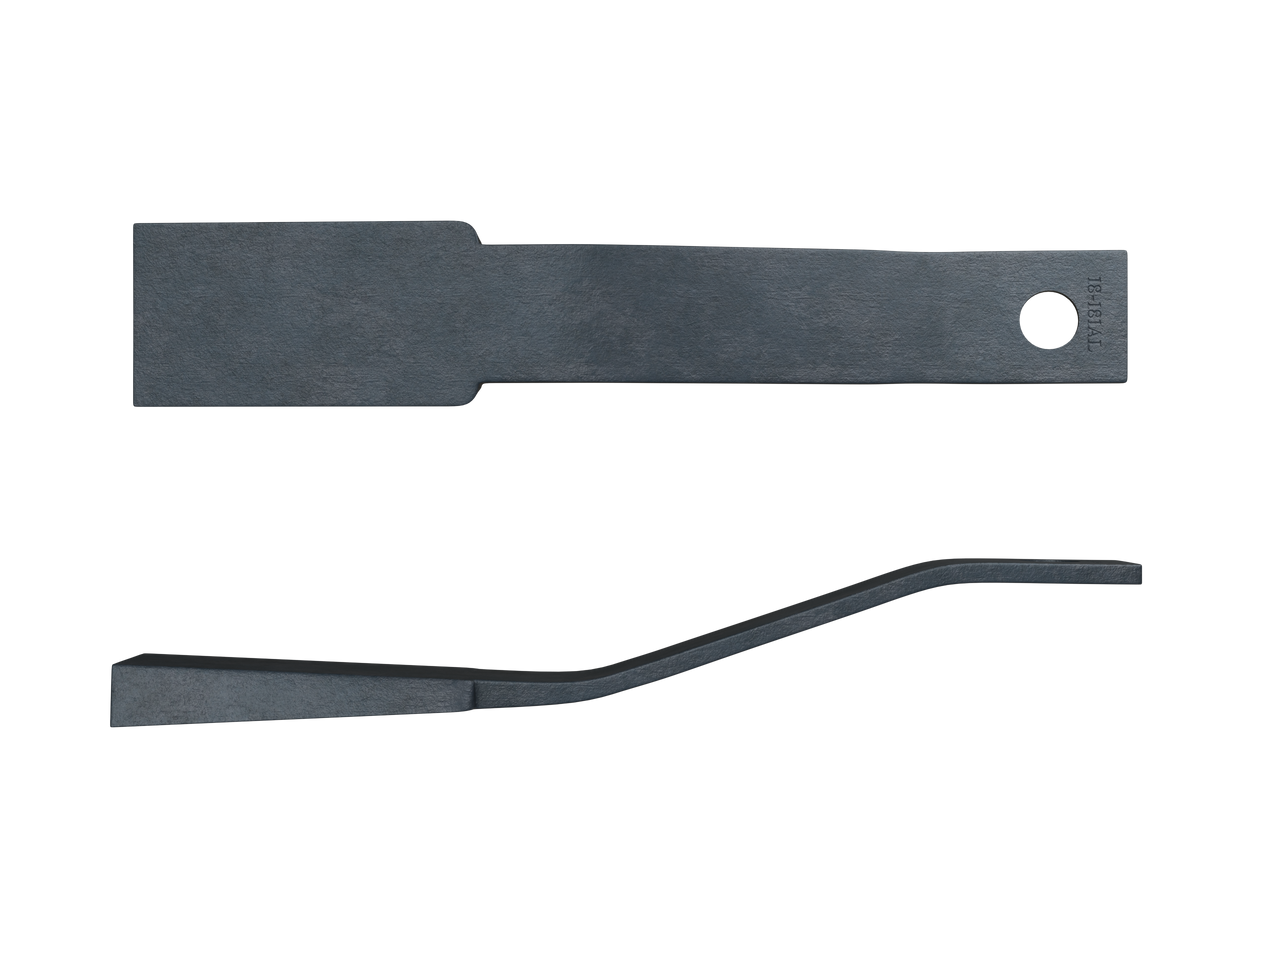 Blade Suctn 1/2x3-1/2x25-1/2 MODEL - 15' Flex Eagle ( 6 Used ) Updraft  CCW Rotation  O.E.M. No. 18-181AL, 7-724